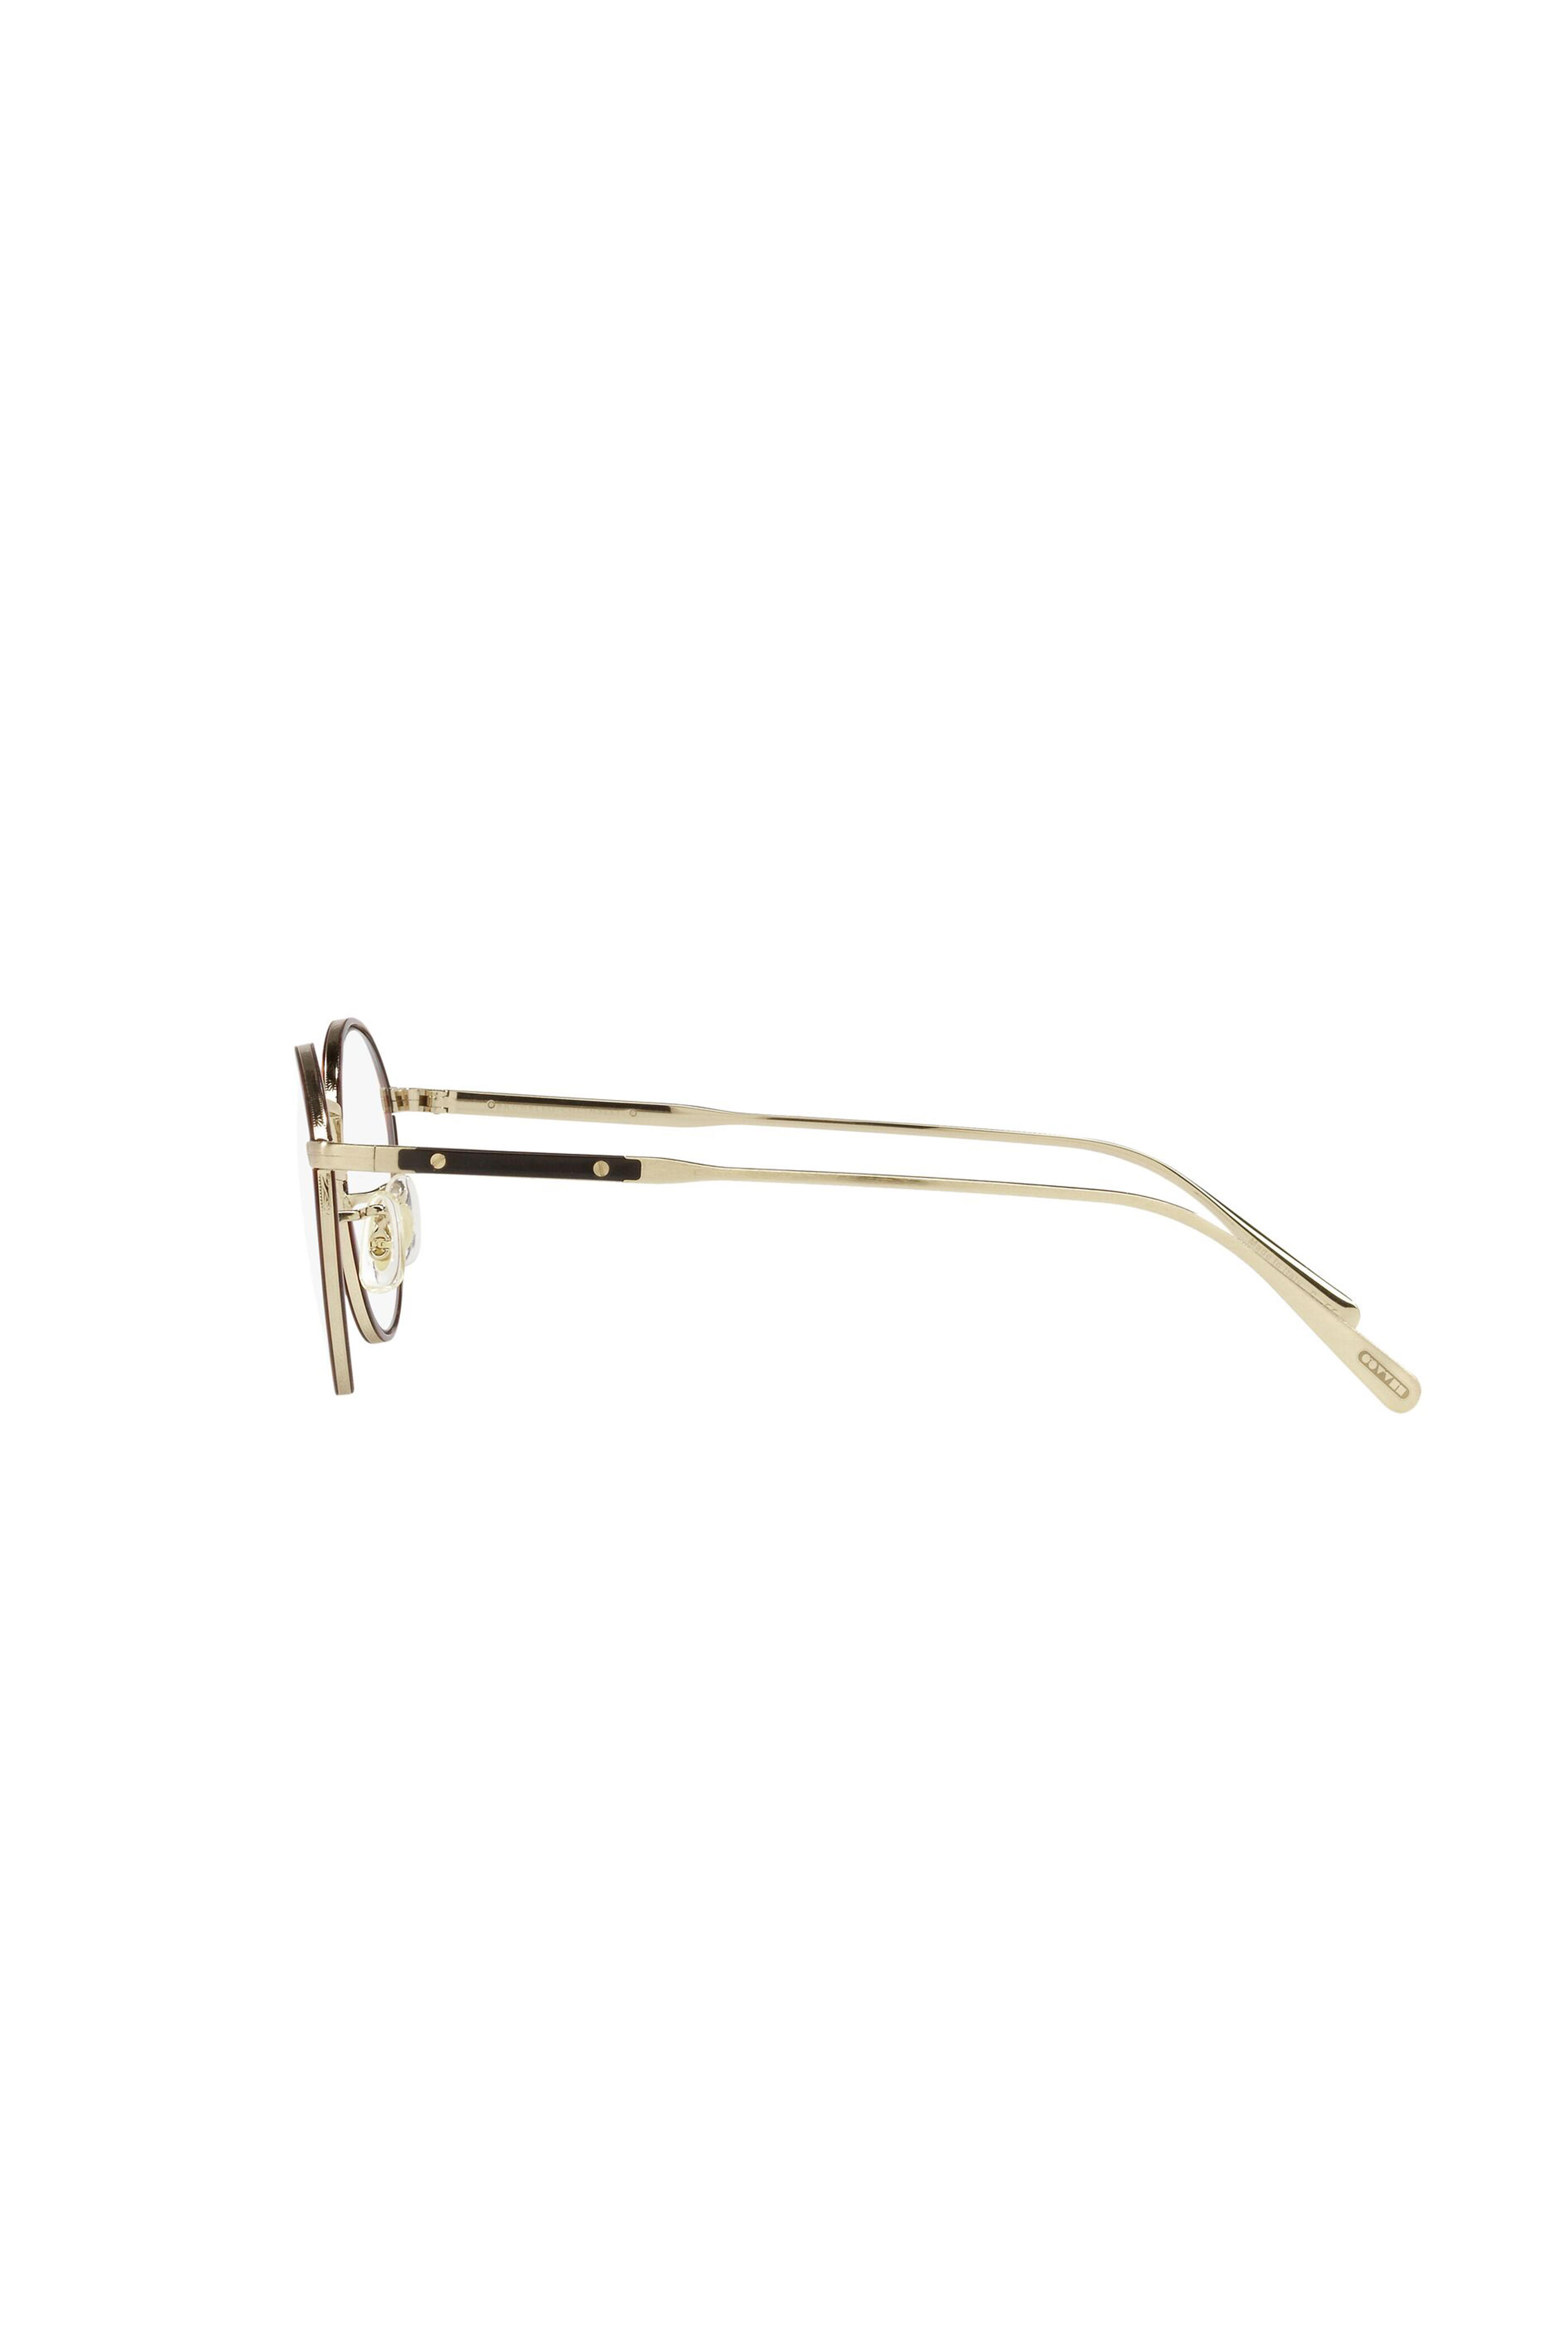 Oliver Peoples - Brunello Cucinelli Artemio Brushed Gold Sunglasses